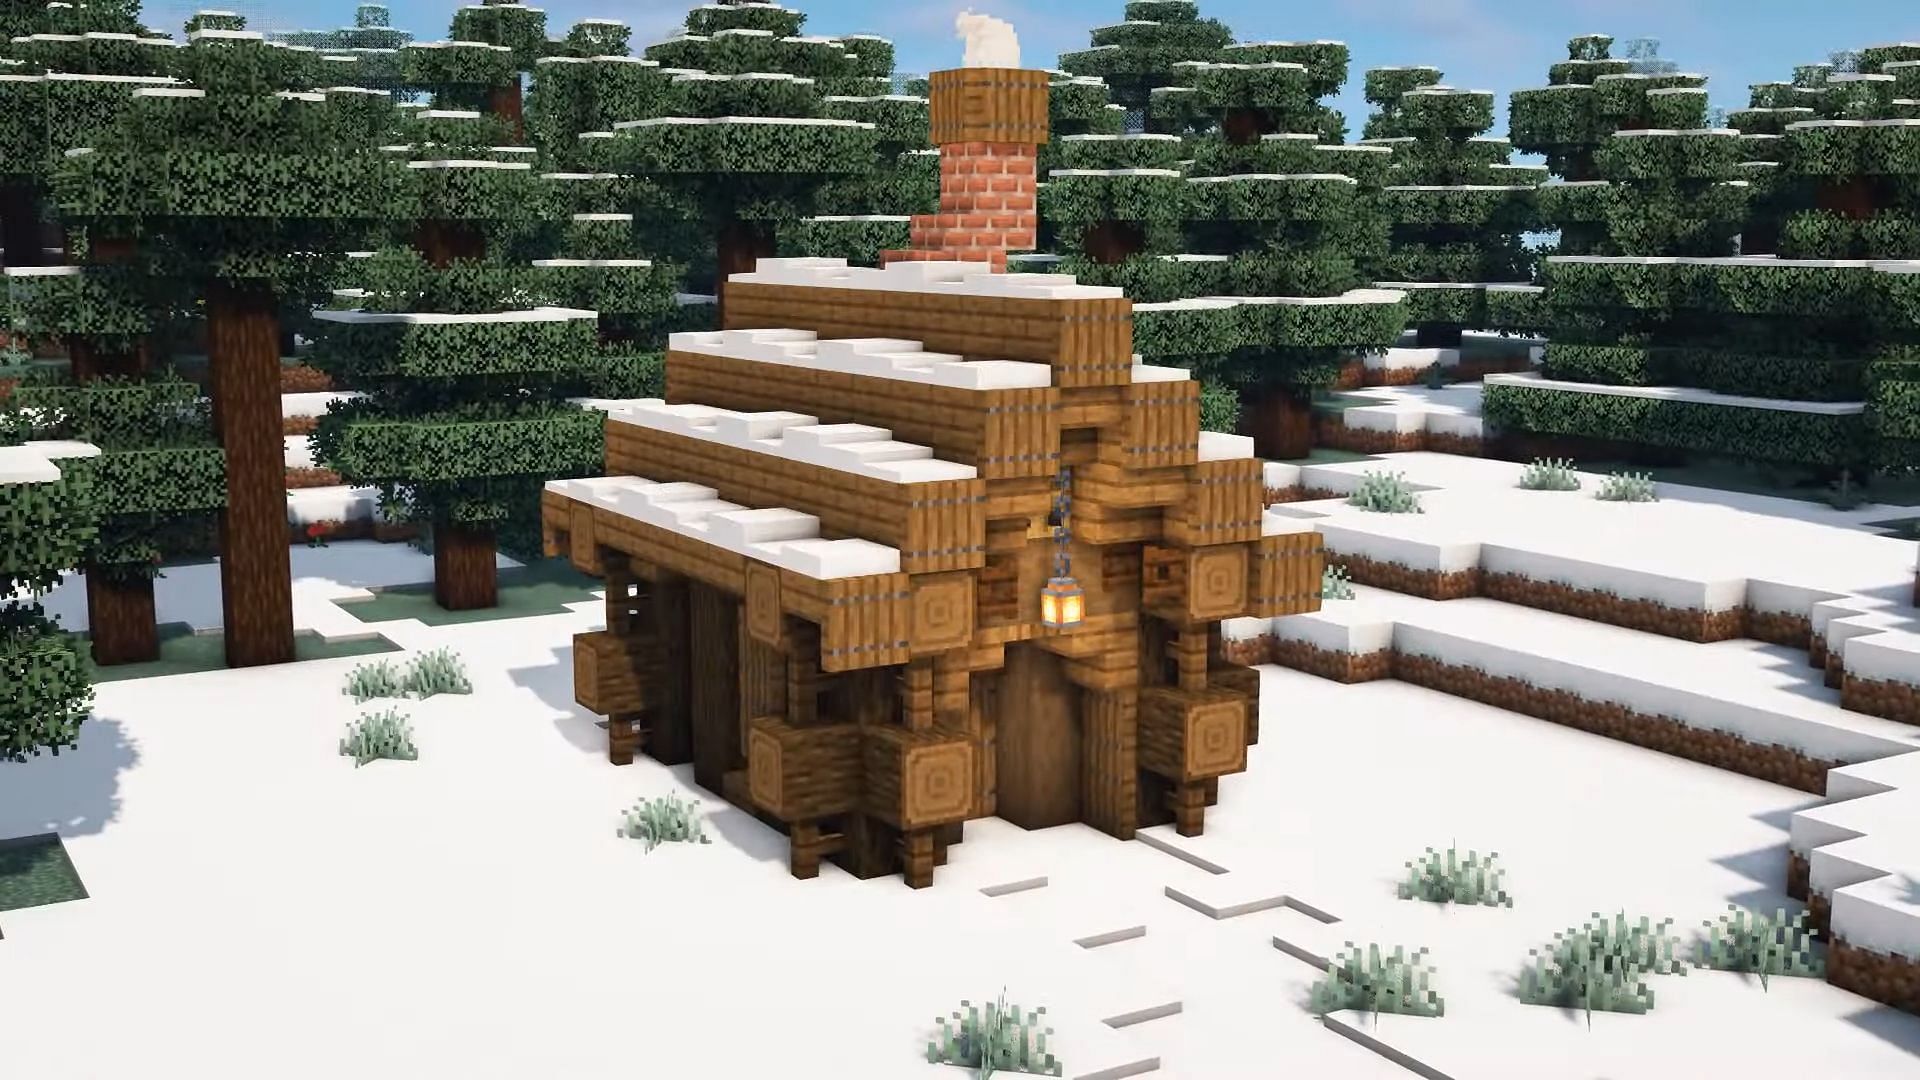 Tundra cabin build (Image via IrsMarloe)